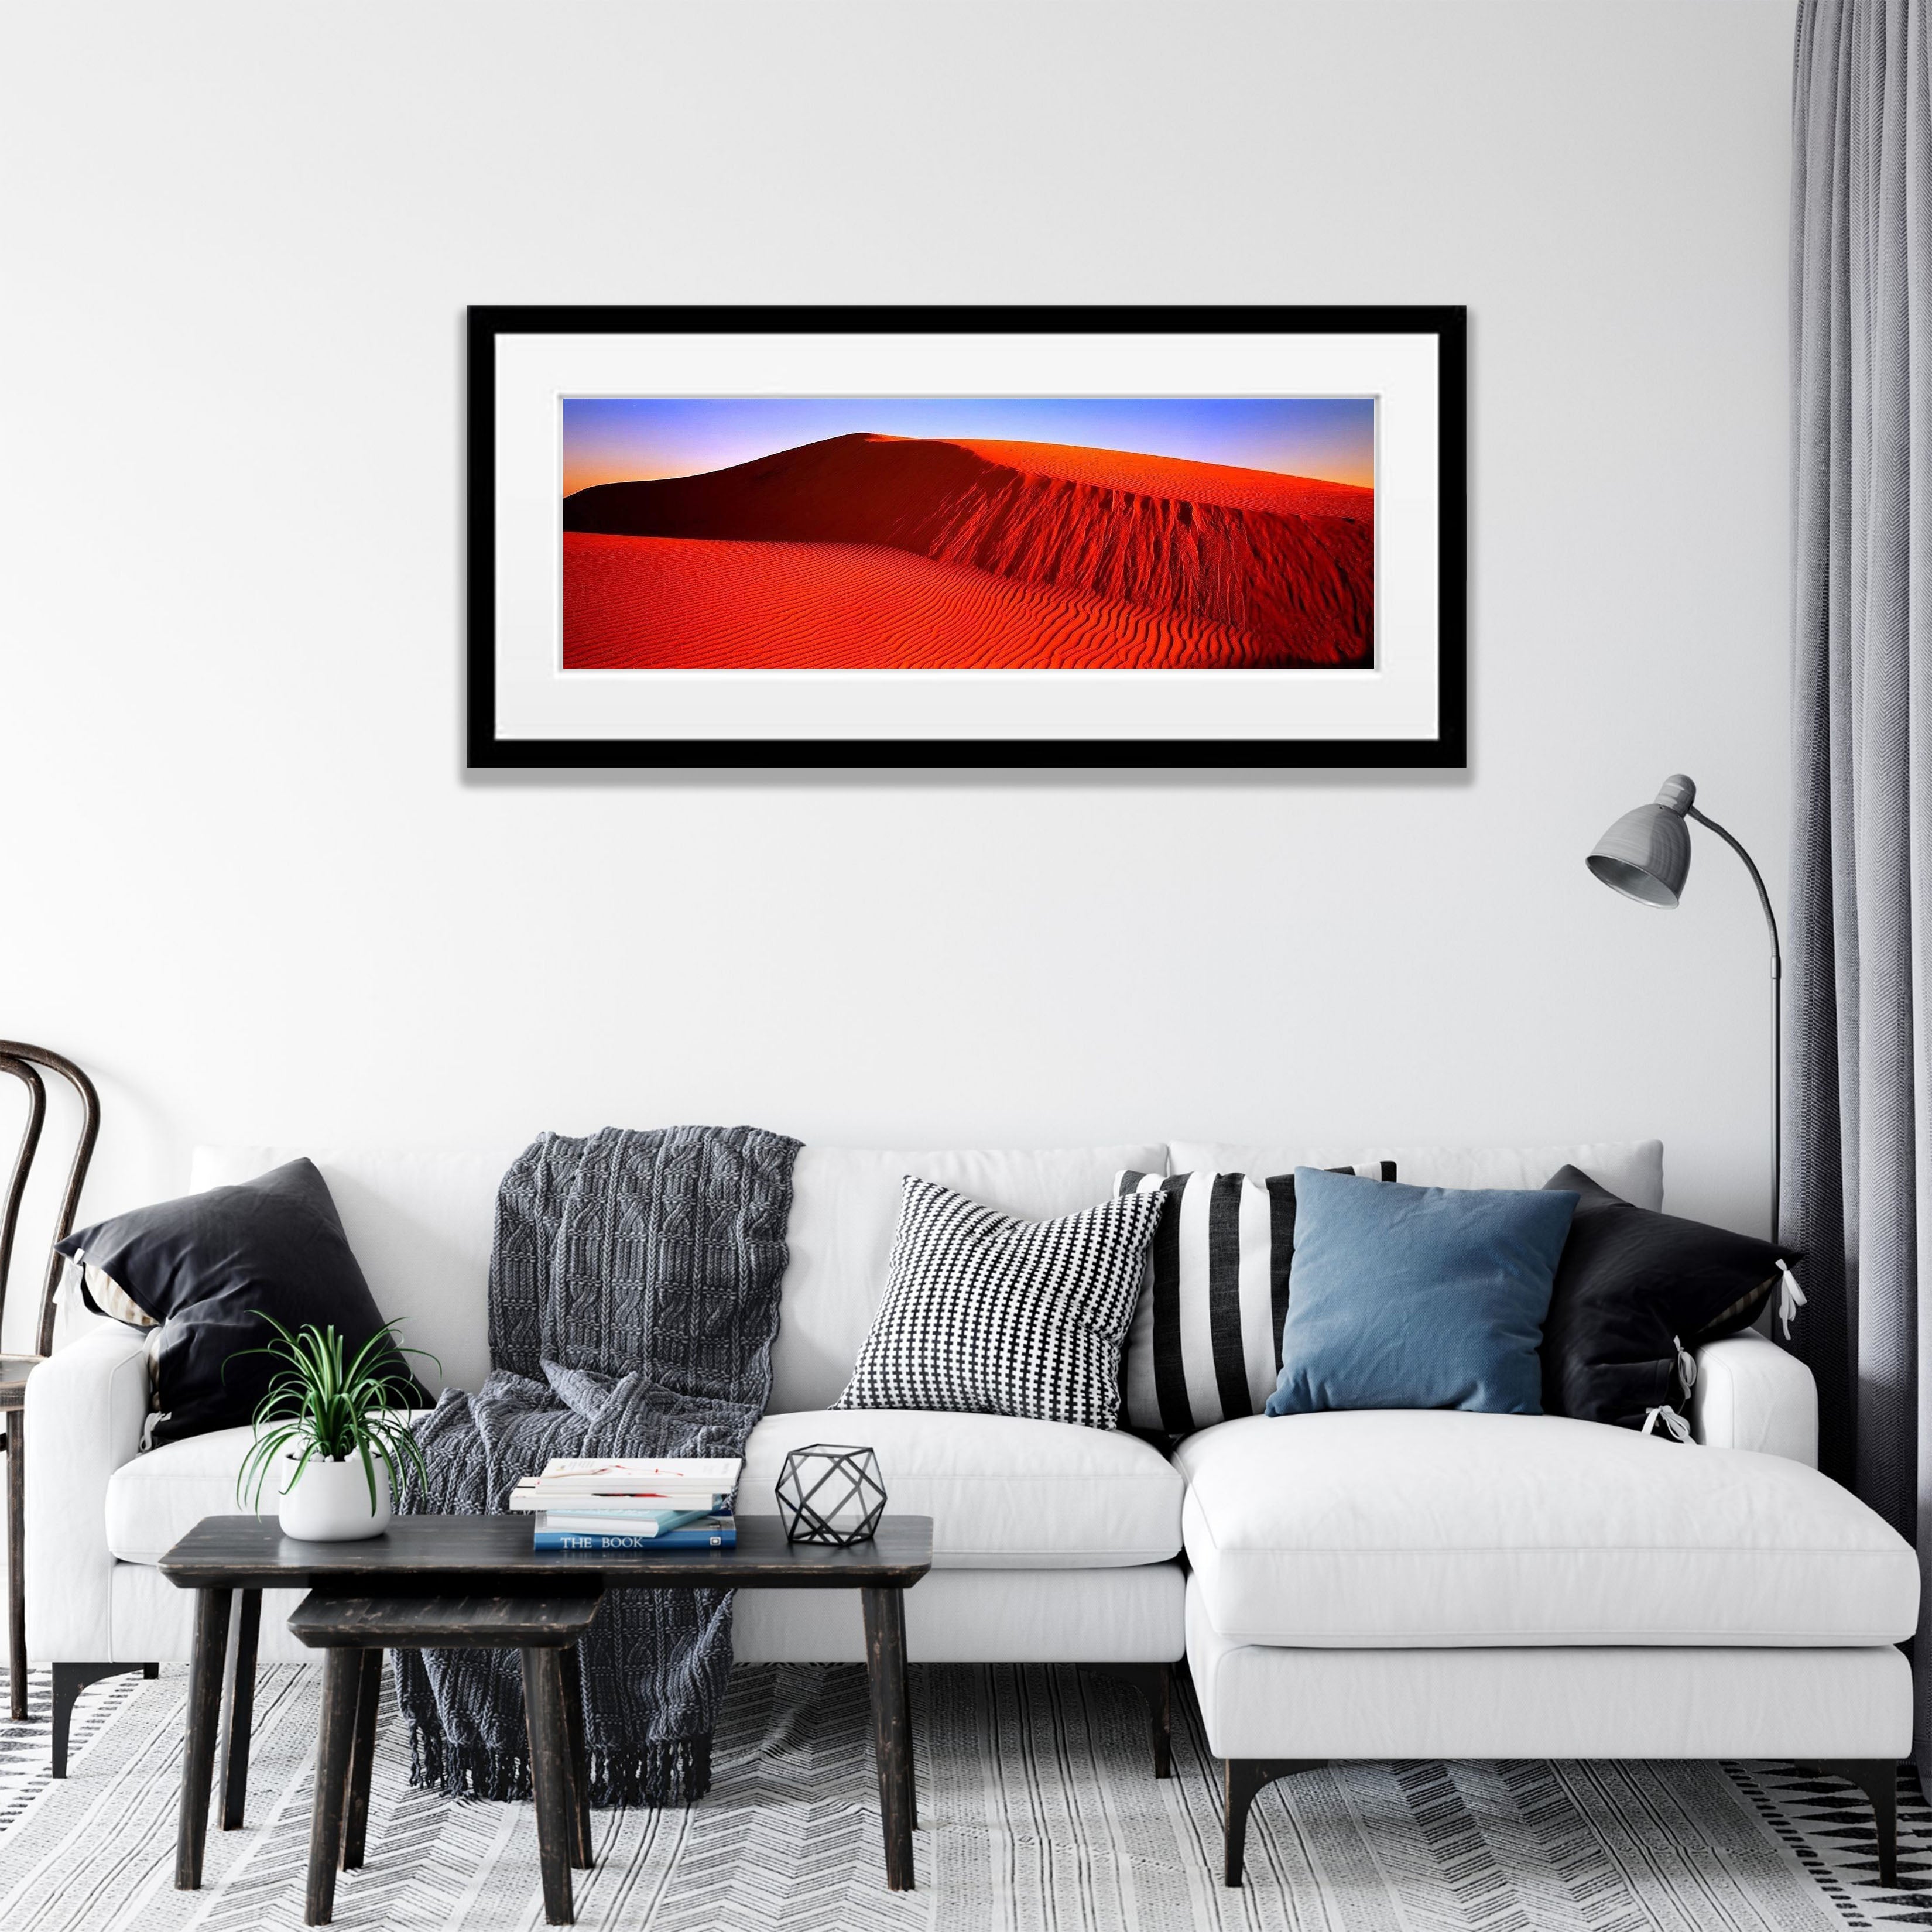 Red Dune - Outback Australia